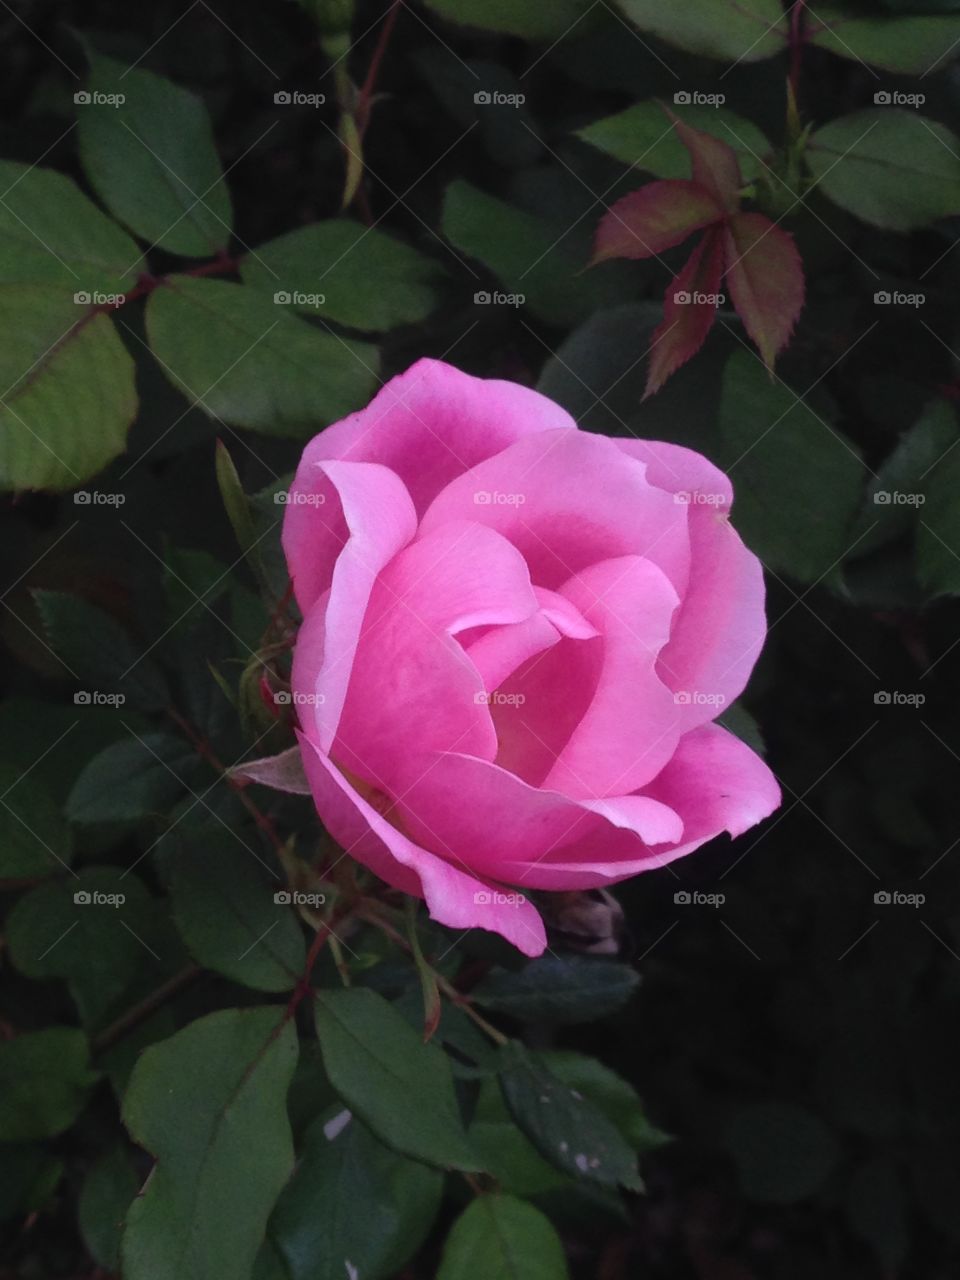 Shaded rose